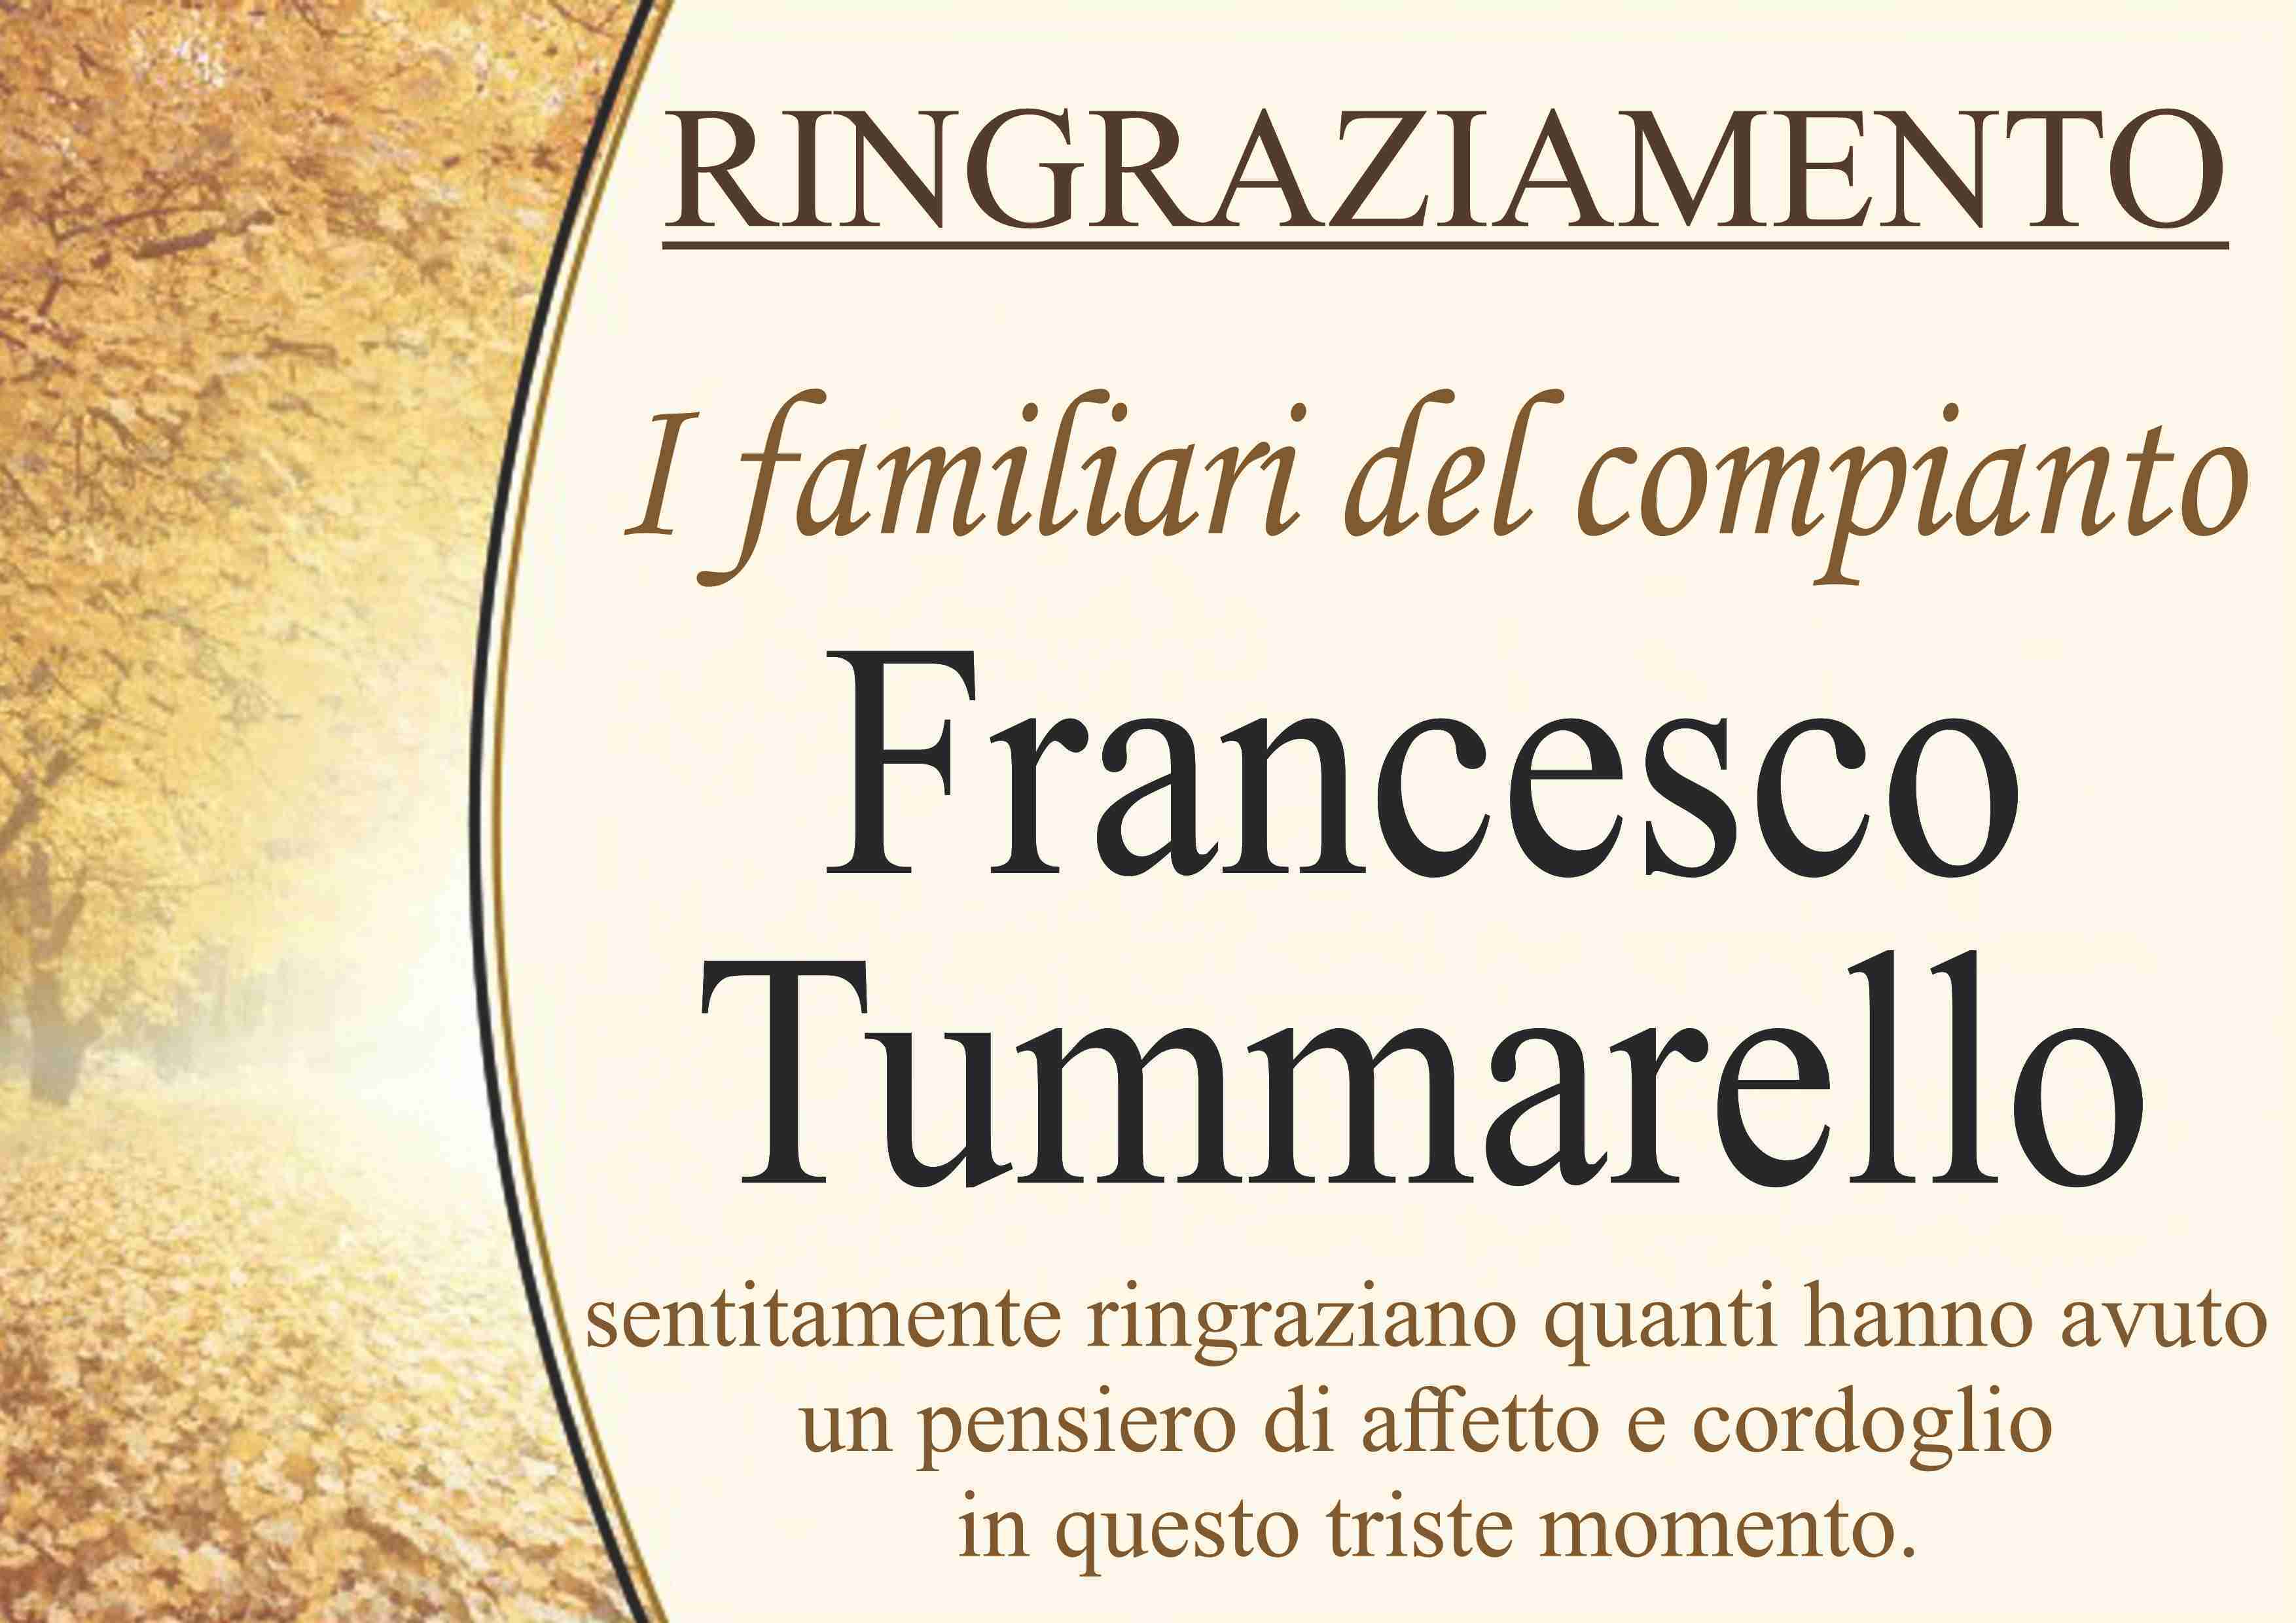 Francesco Tummarello